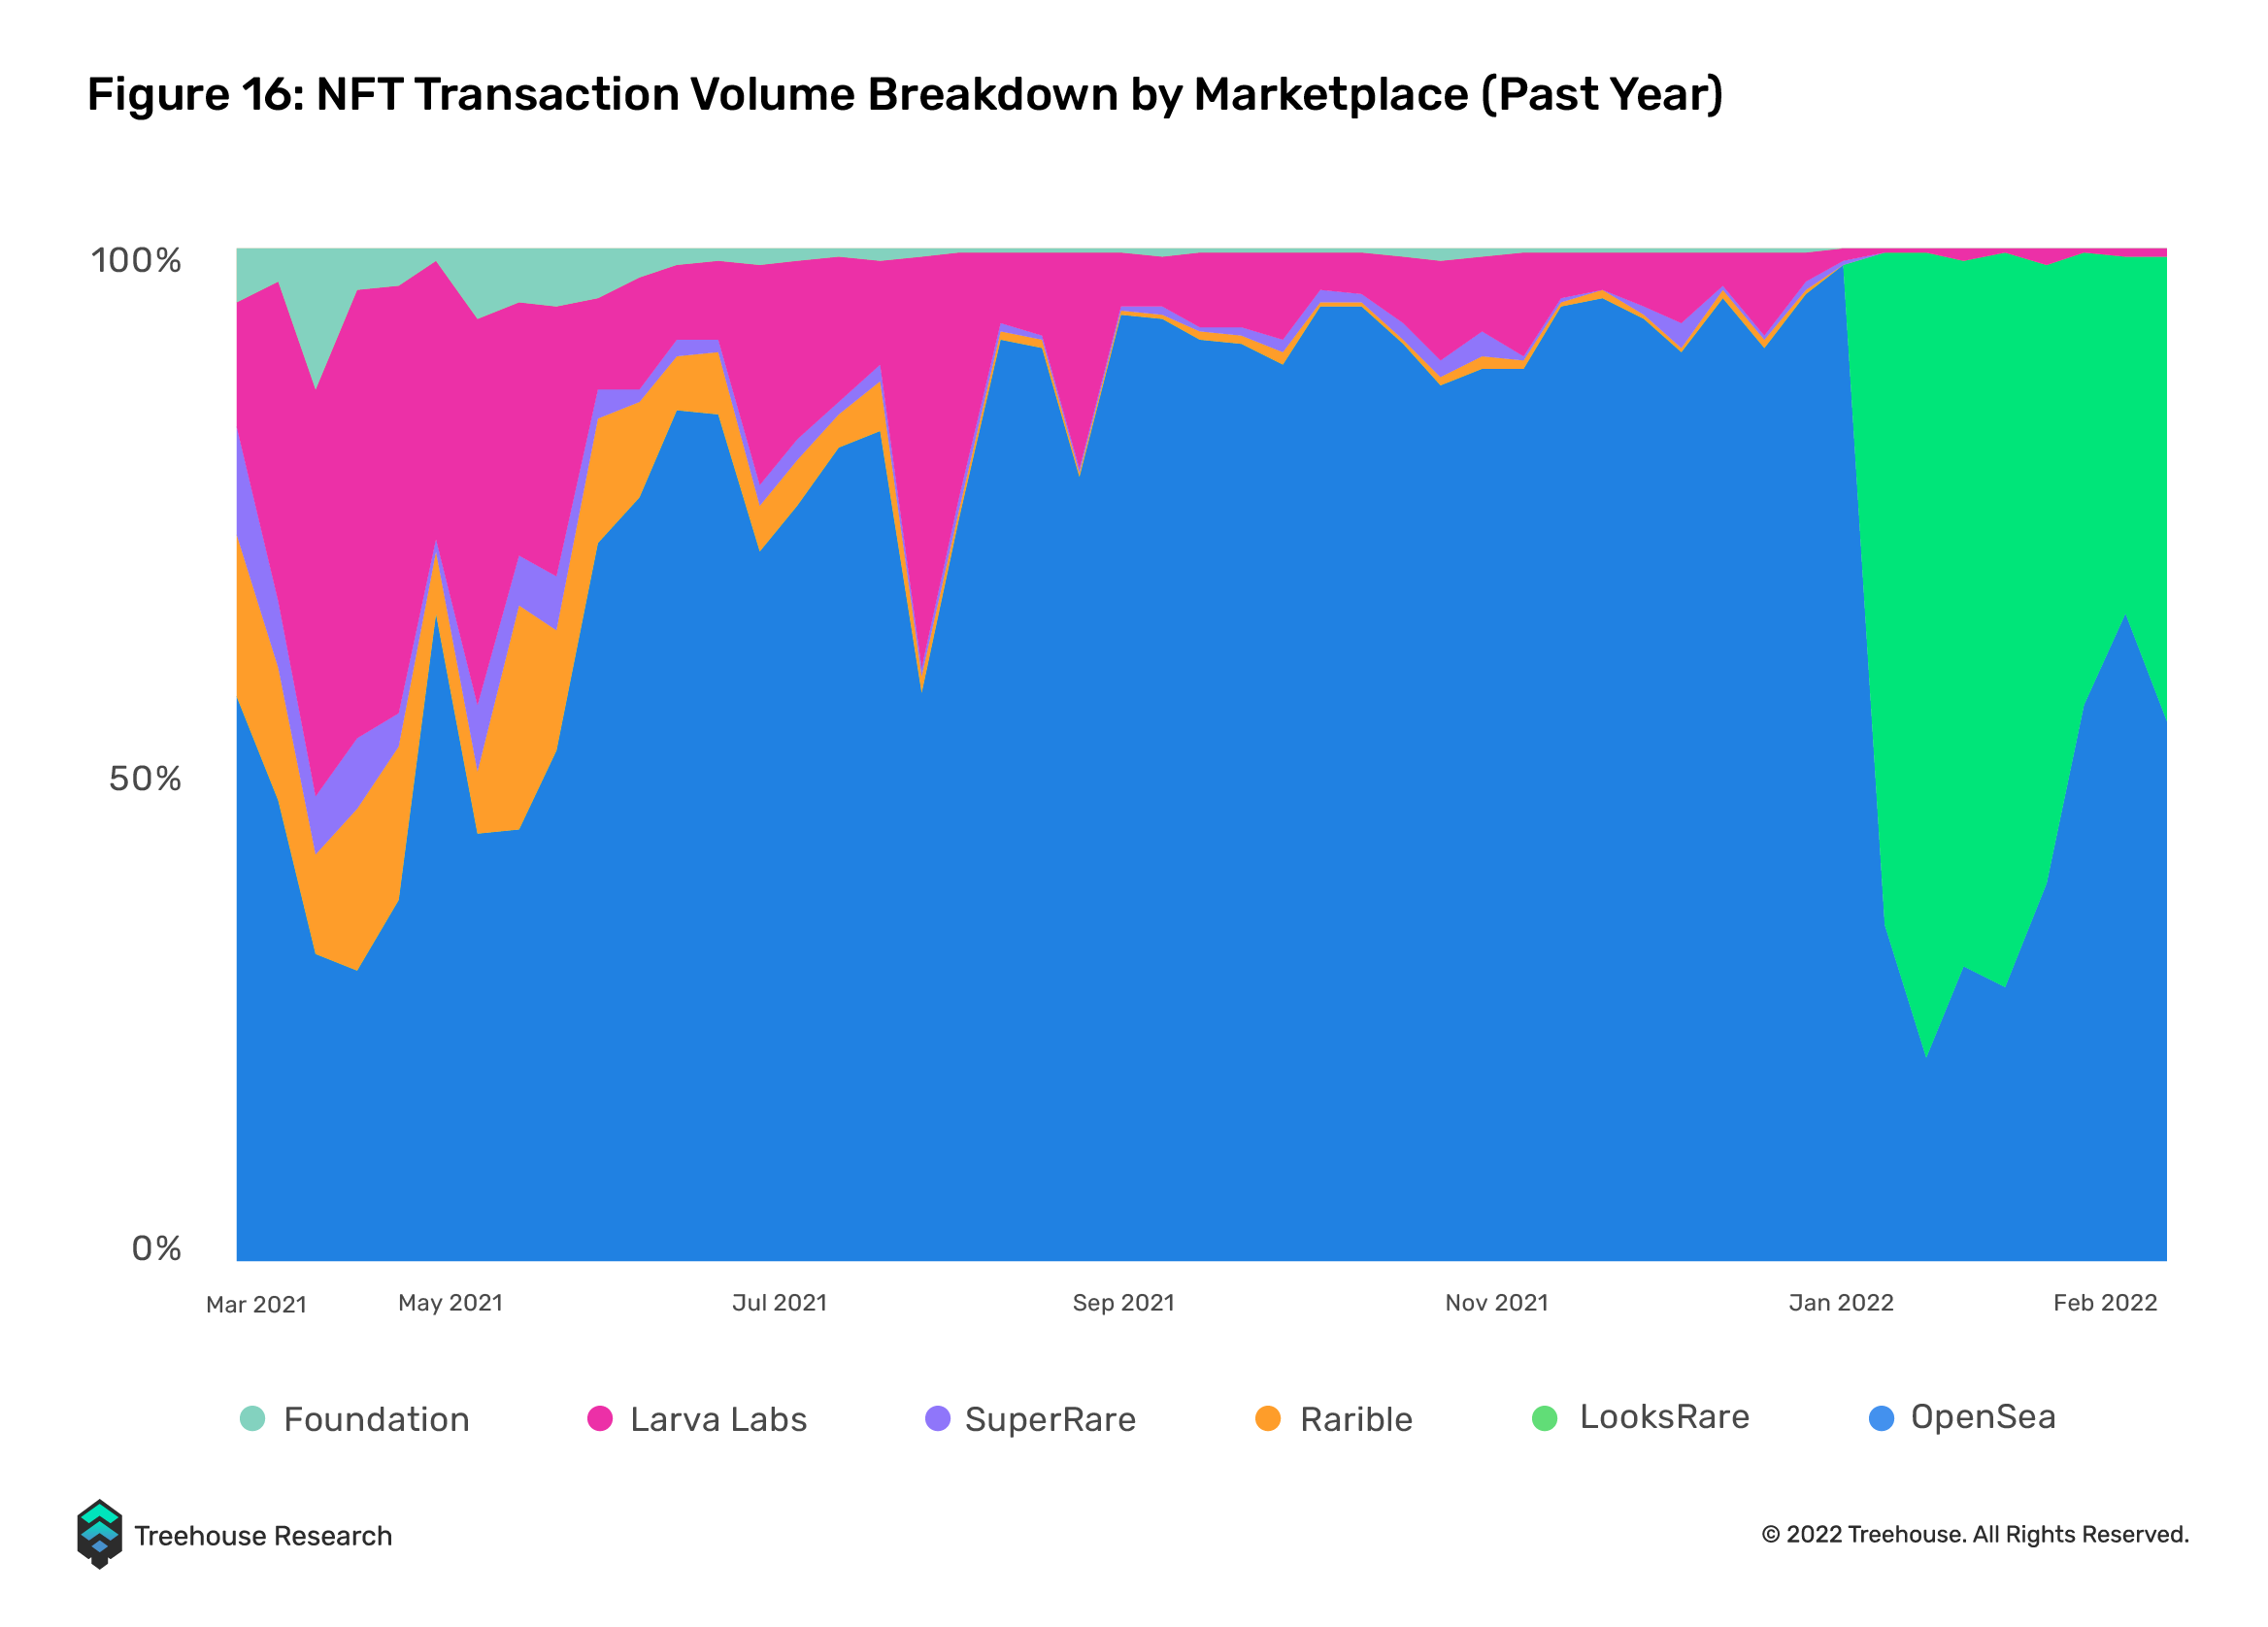 NFT transaction volume breakdown by marketplace